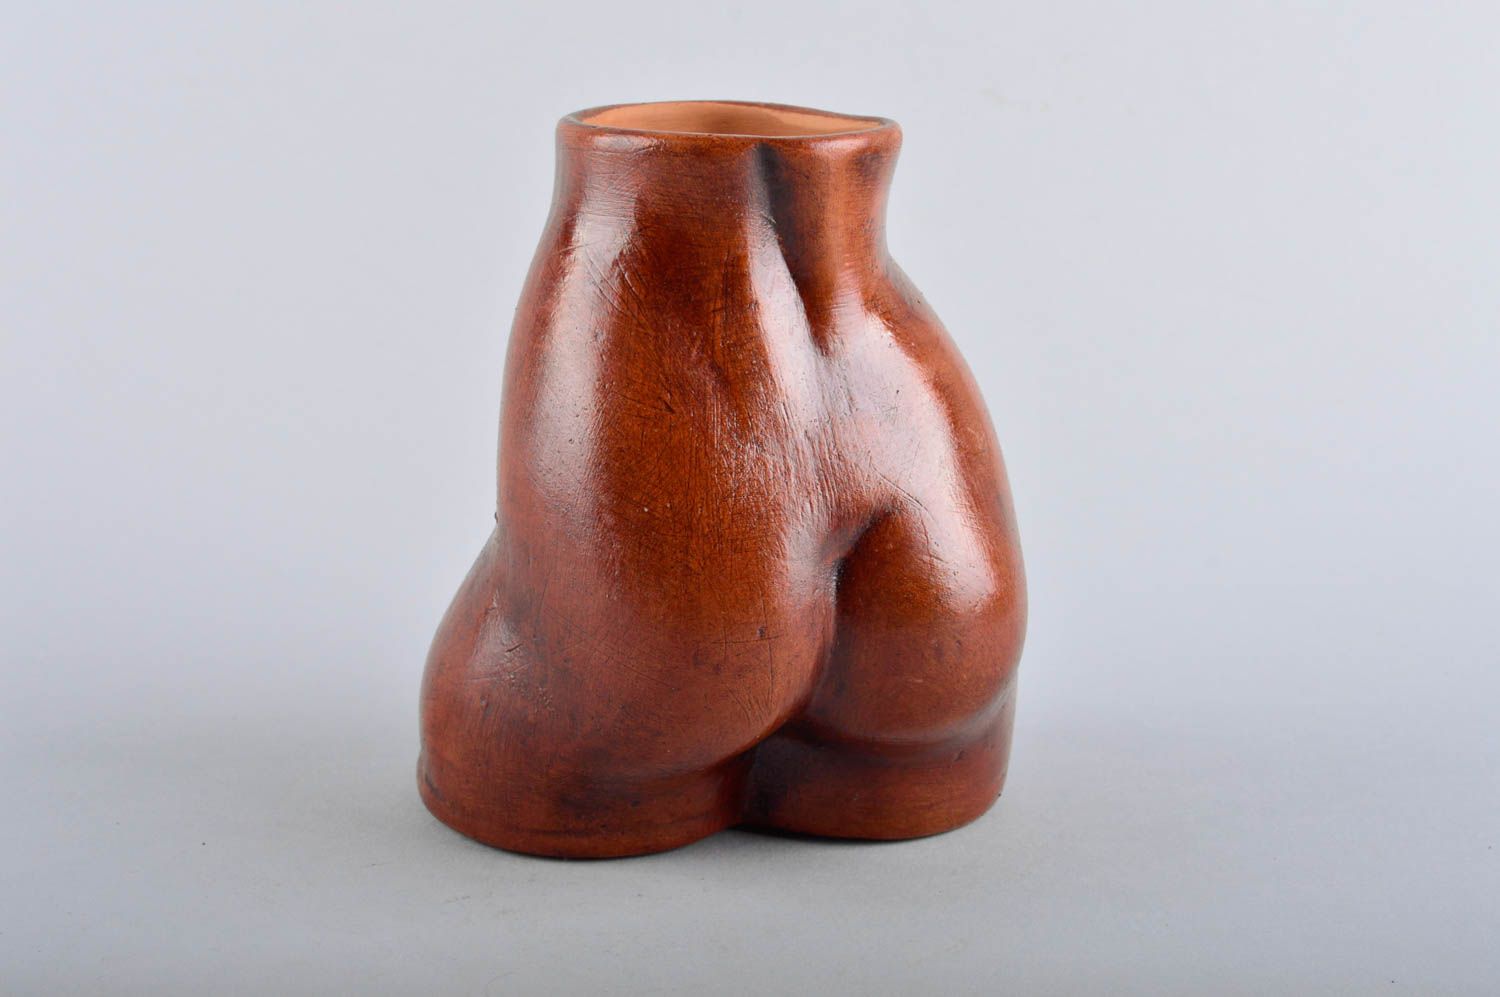 15 oz ceramic brown clay vase jug 4 inches tall 0,81 lb photo 3